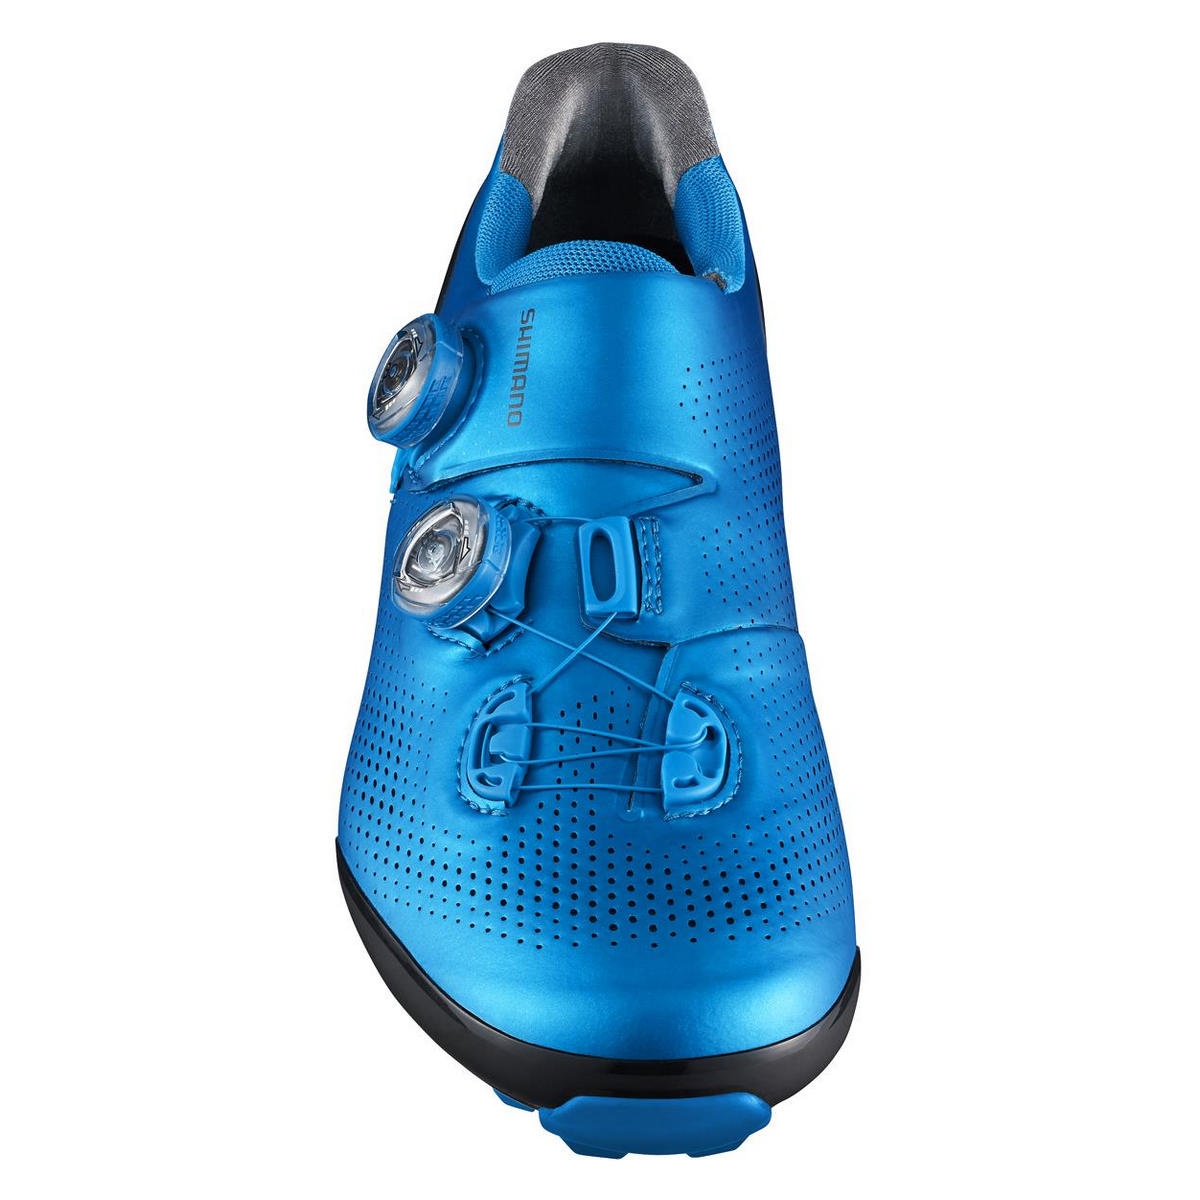 Shimano scarpe mtb s phyre xc 901 azzurra